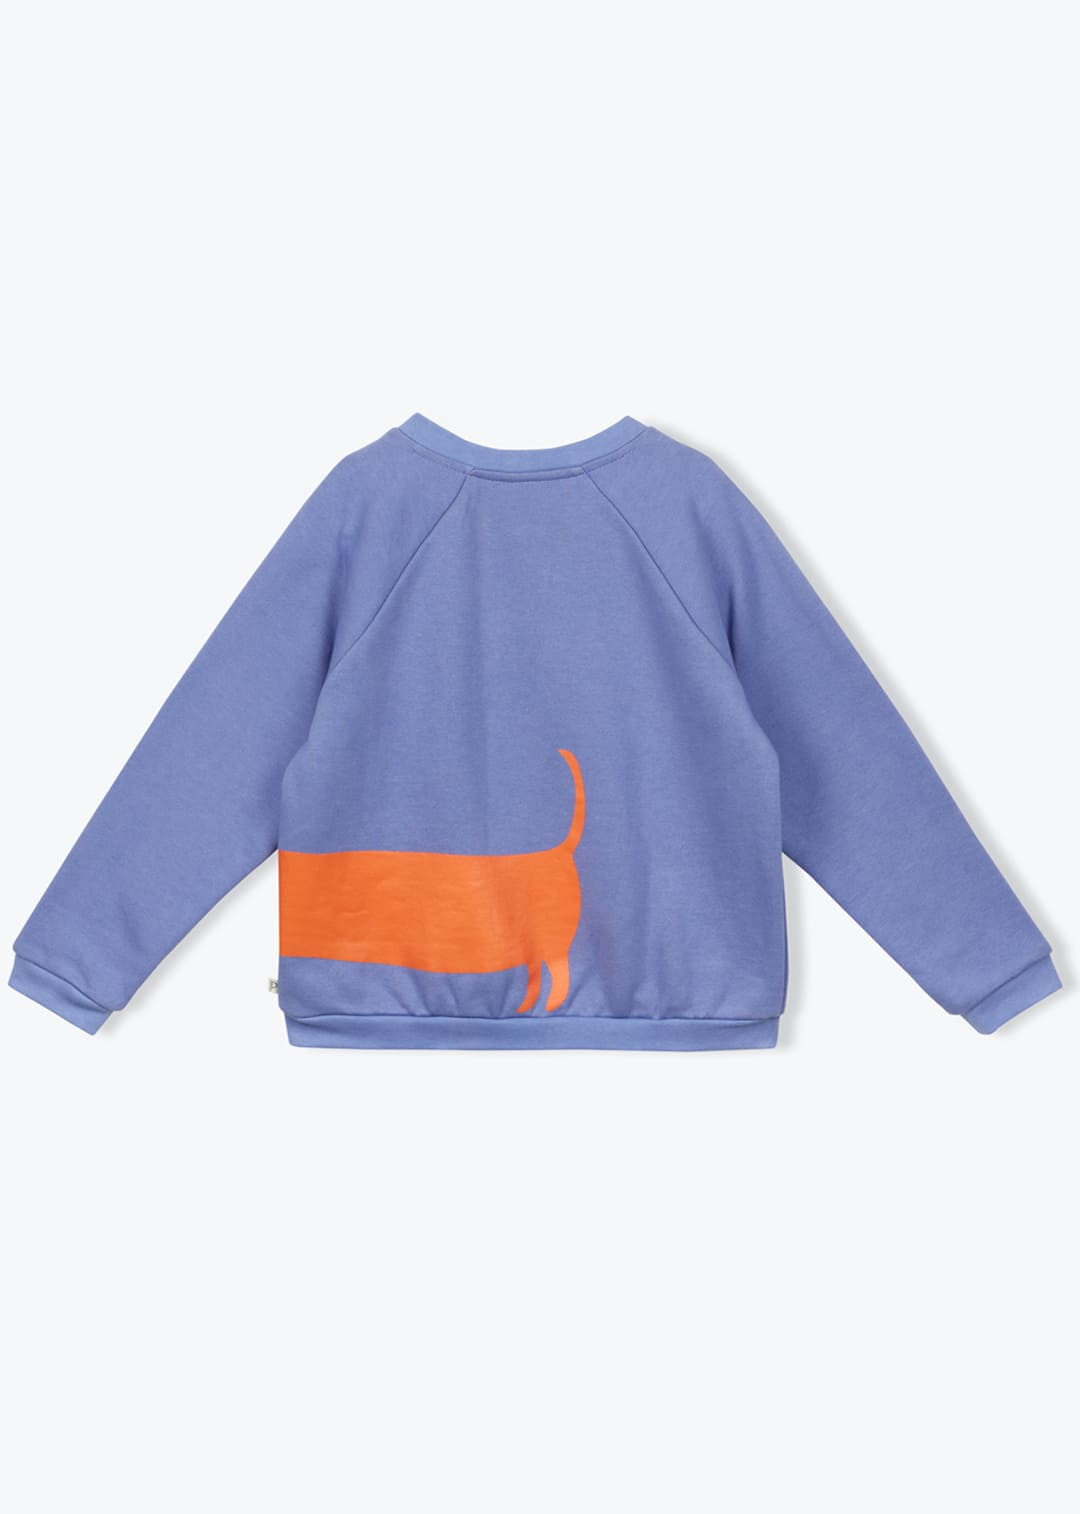 Orange Dog Sweatshirt